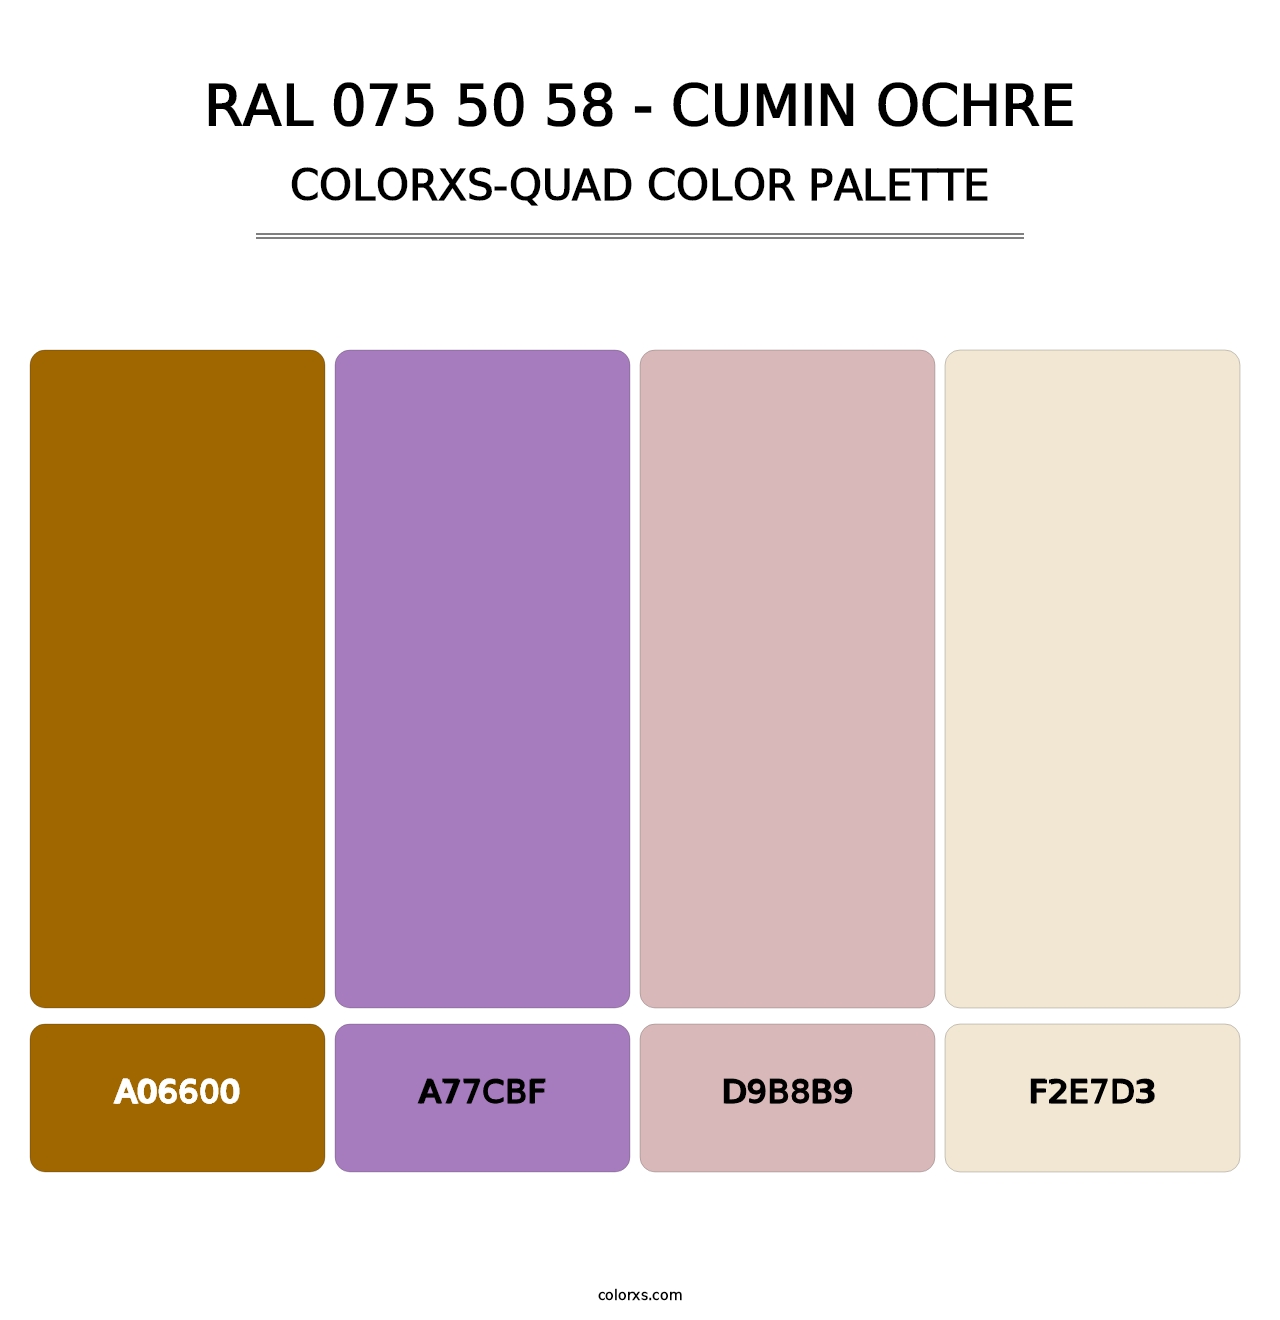 RAL 075 50 58 - Cumin Ochre - Colorxs Quad Palette